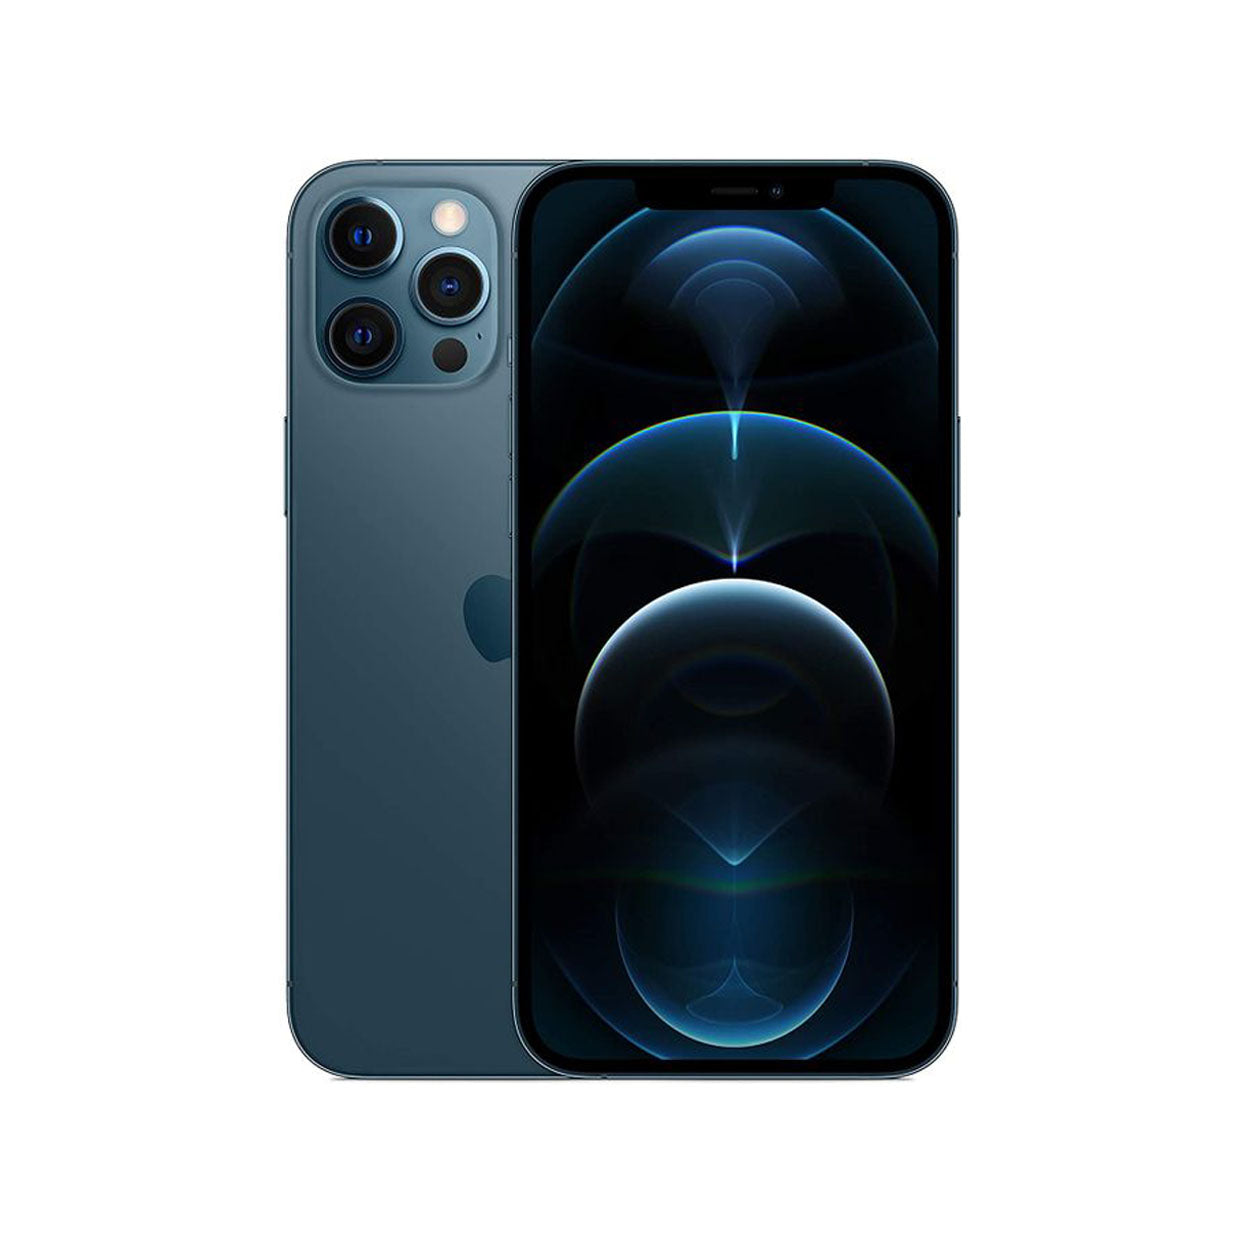 Apple iPhone 12 Pro Max (256 GB) -Pacific Blue